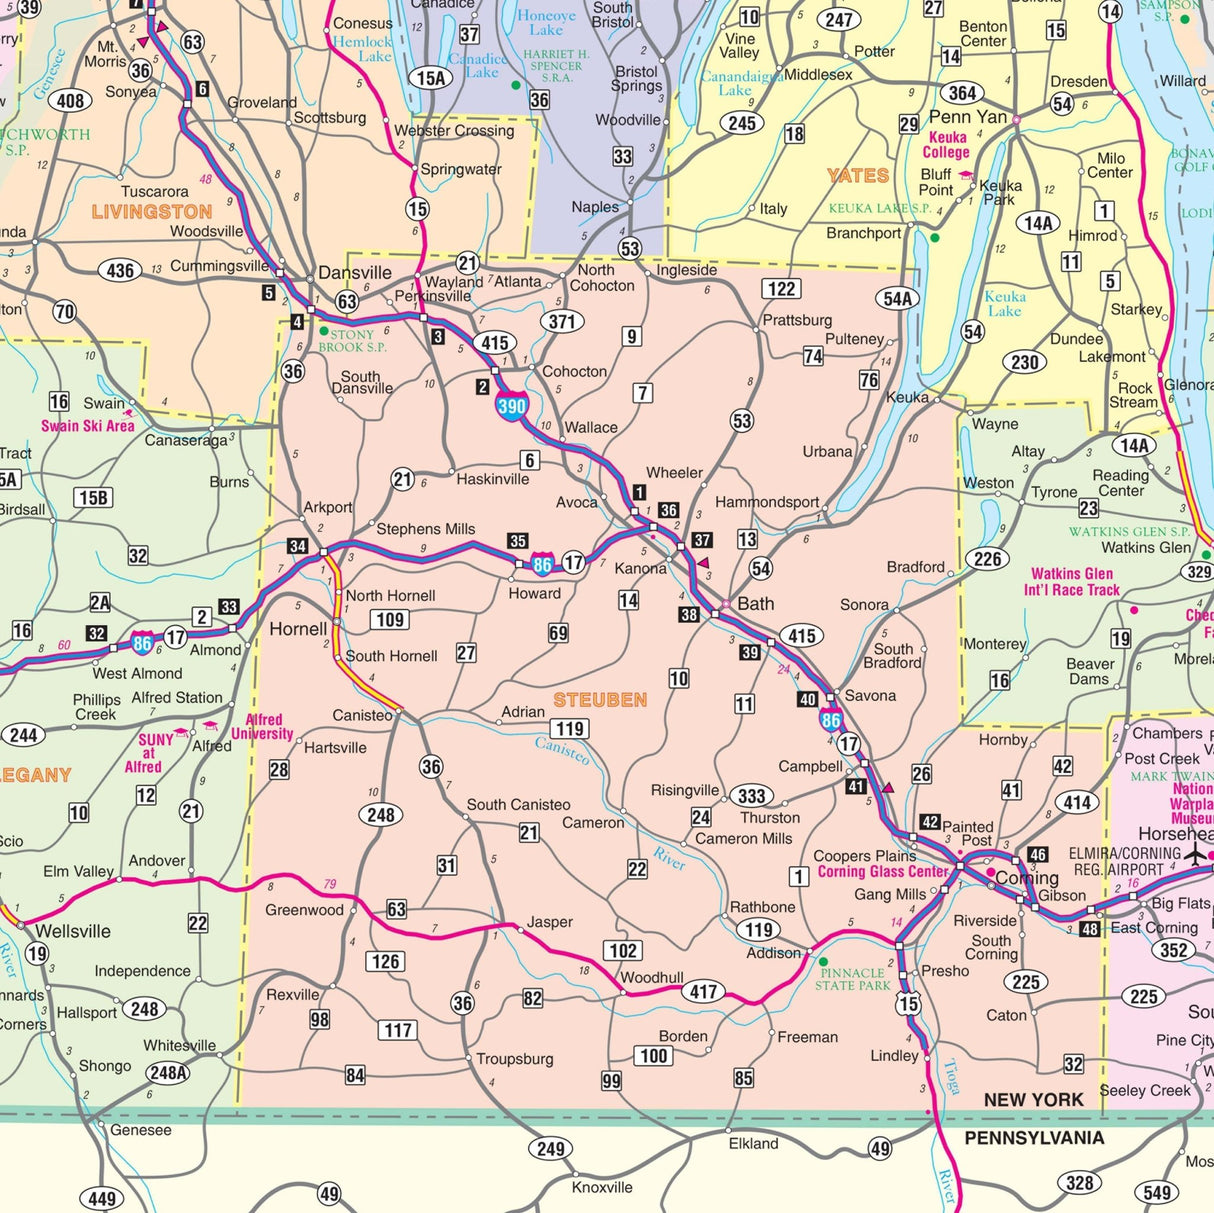 Western New York Regional Wall Map - KA-R-NY-WESTERN-PAPER - Ultimate Globes